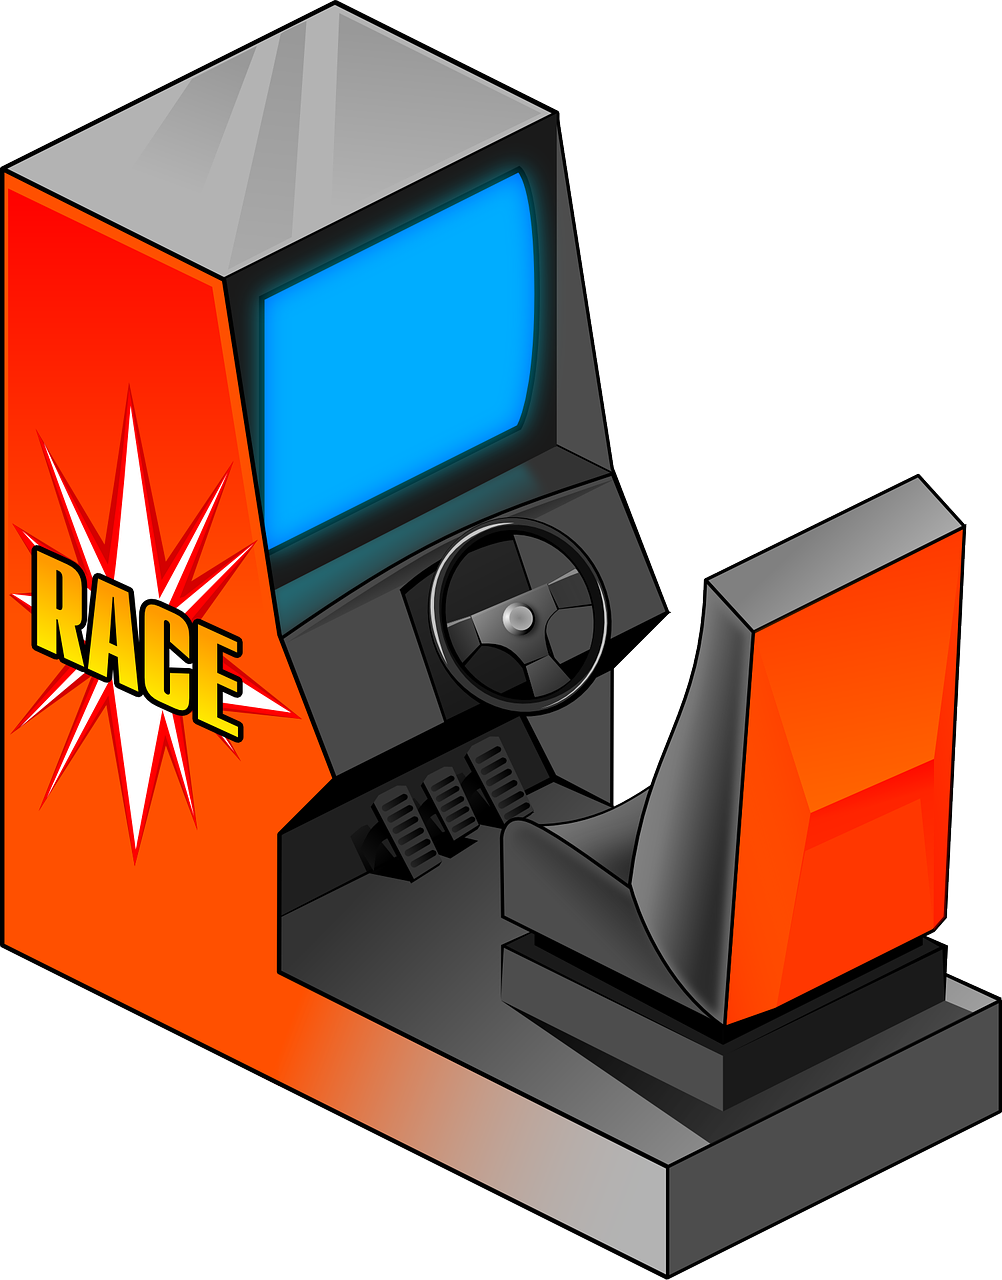 Site Image (Arcade machine racing game)